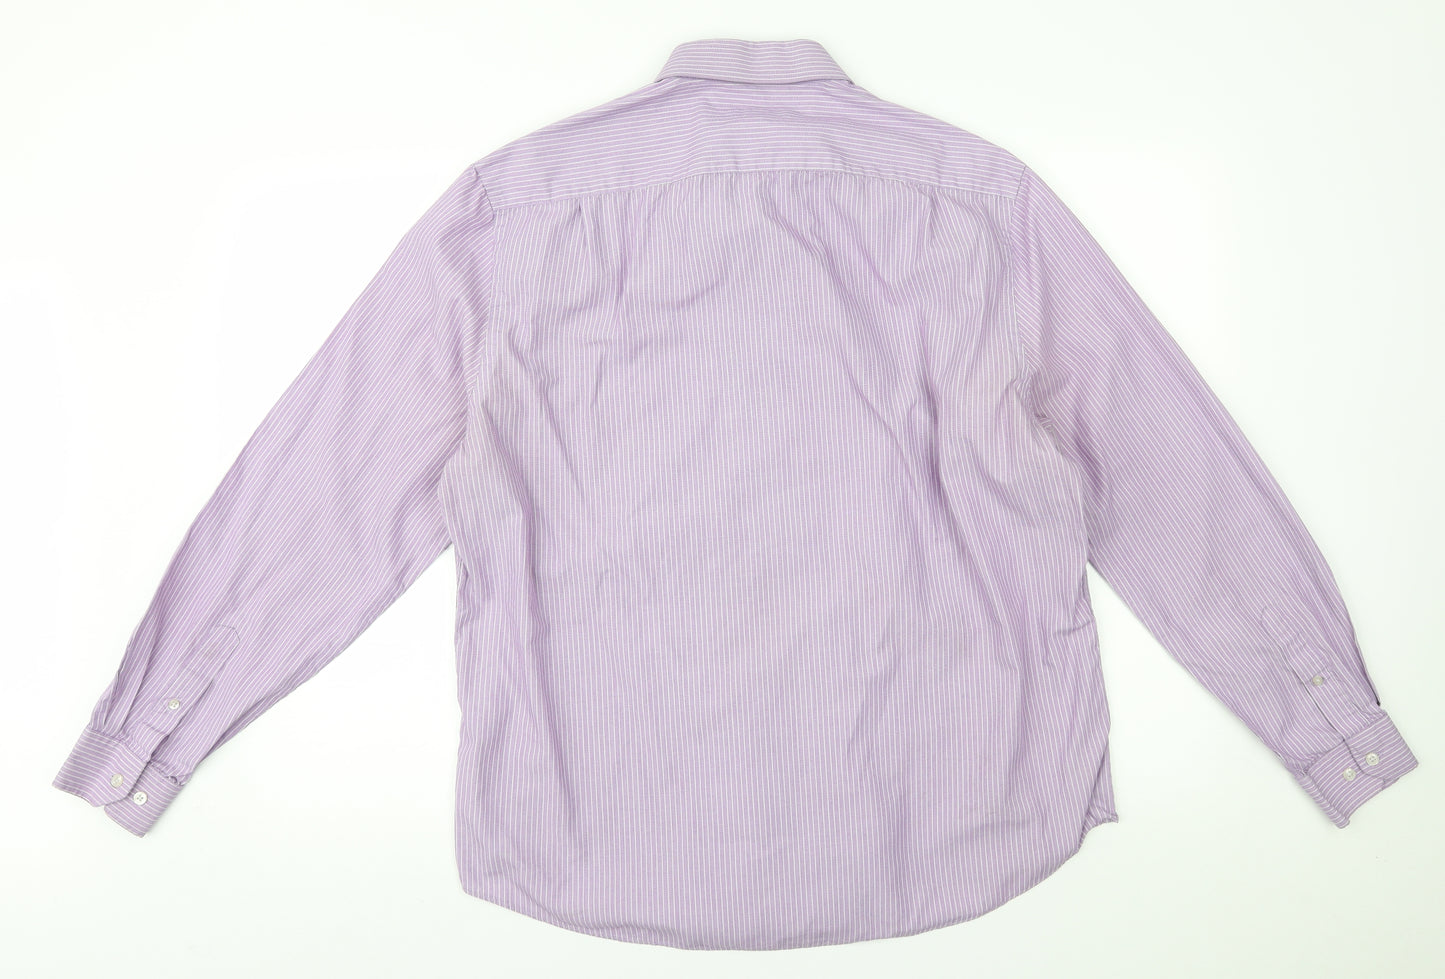 George Mens Purple    Dress Shirt Size 16.5